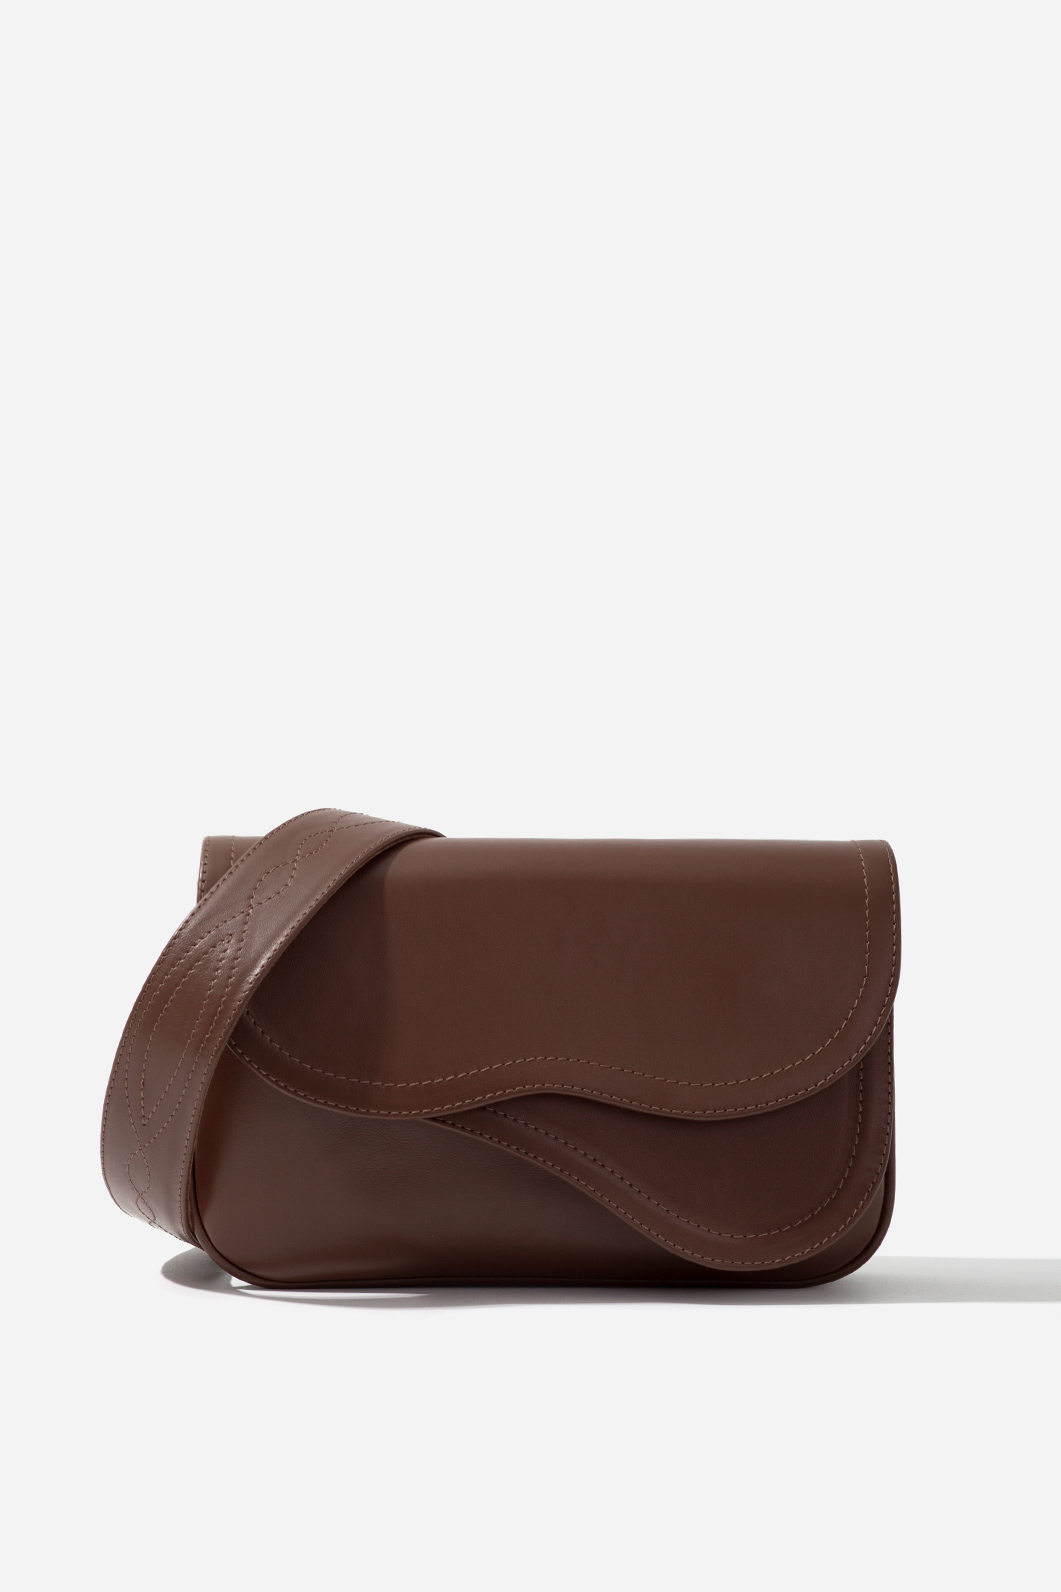 Шоколадна сумка Saddle Bag 2